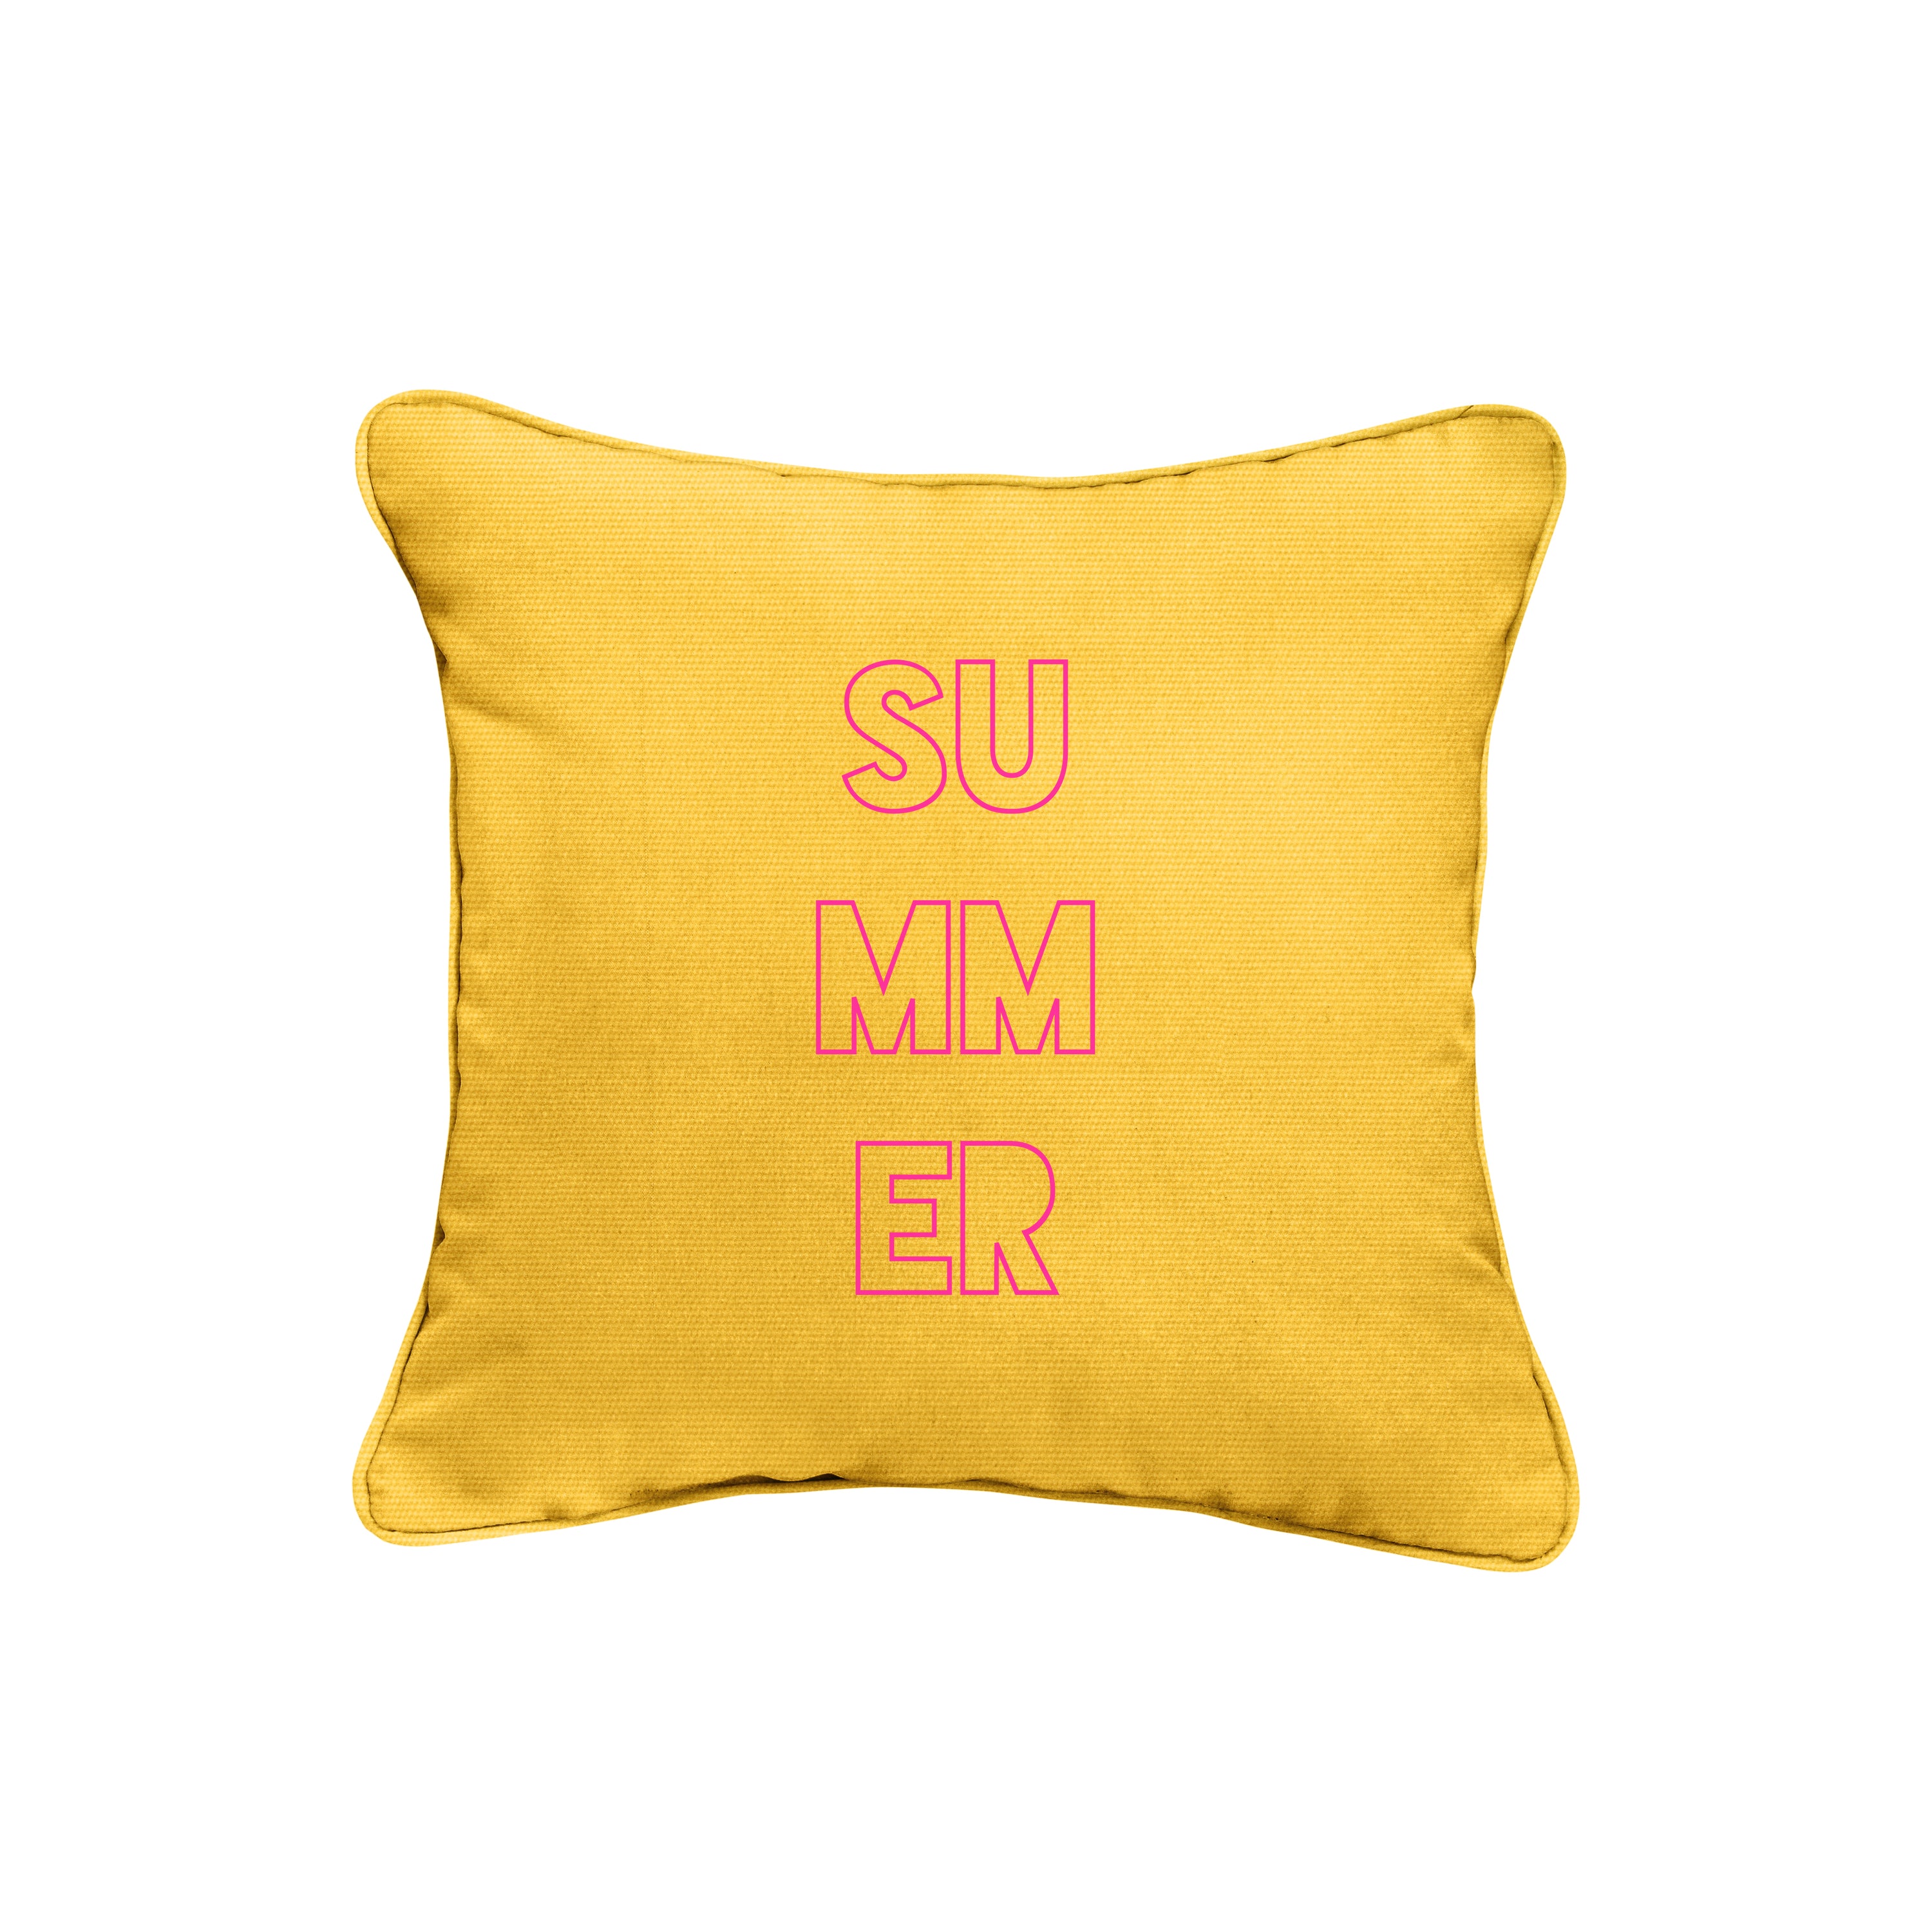 Sunbrella Square Embroidered Outdoor Pillow